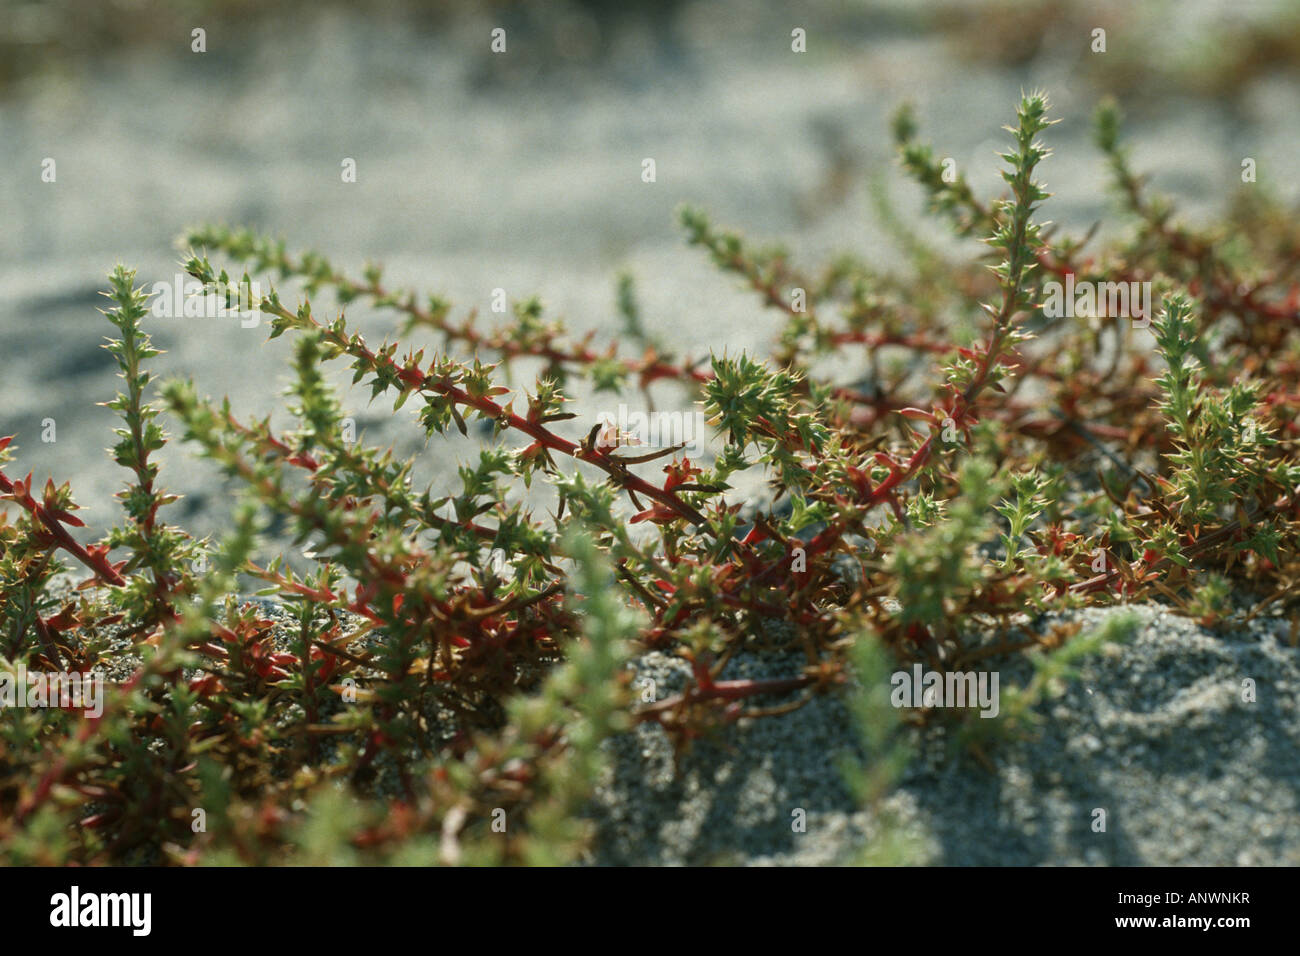 Russian thistle (Salsola kali), numerous plants on salty soil Stock Photo